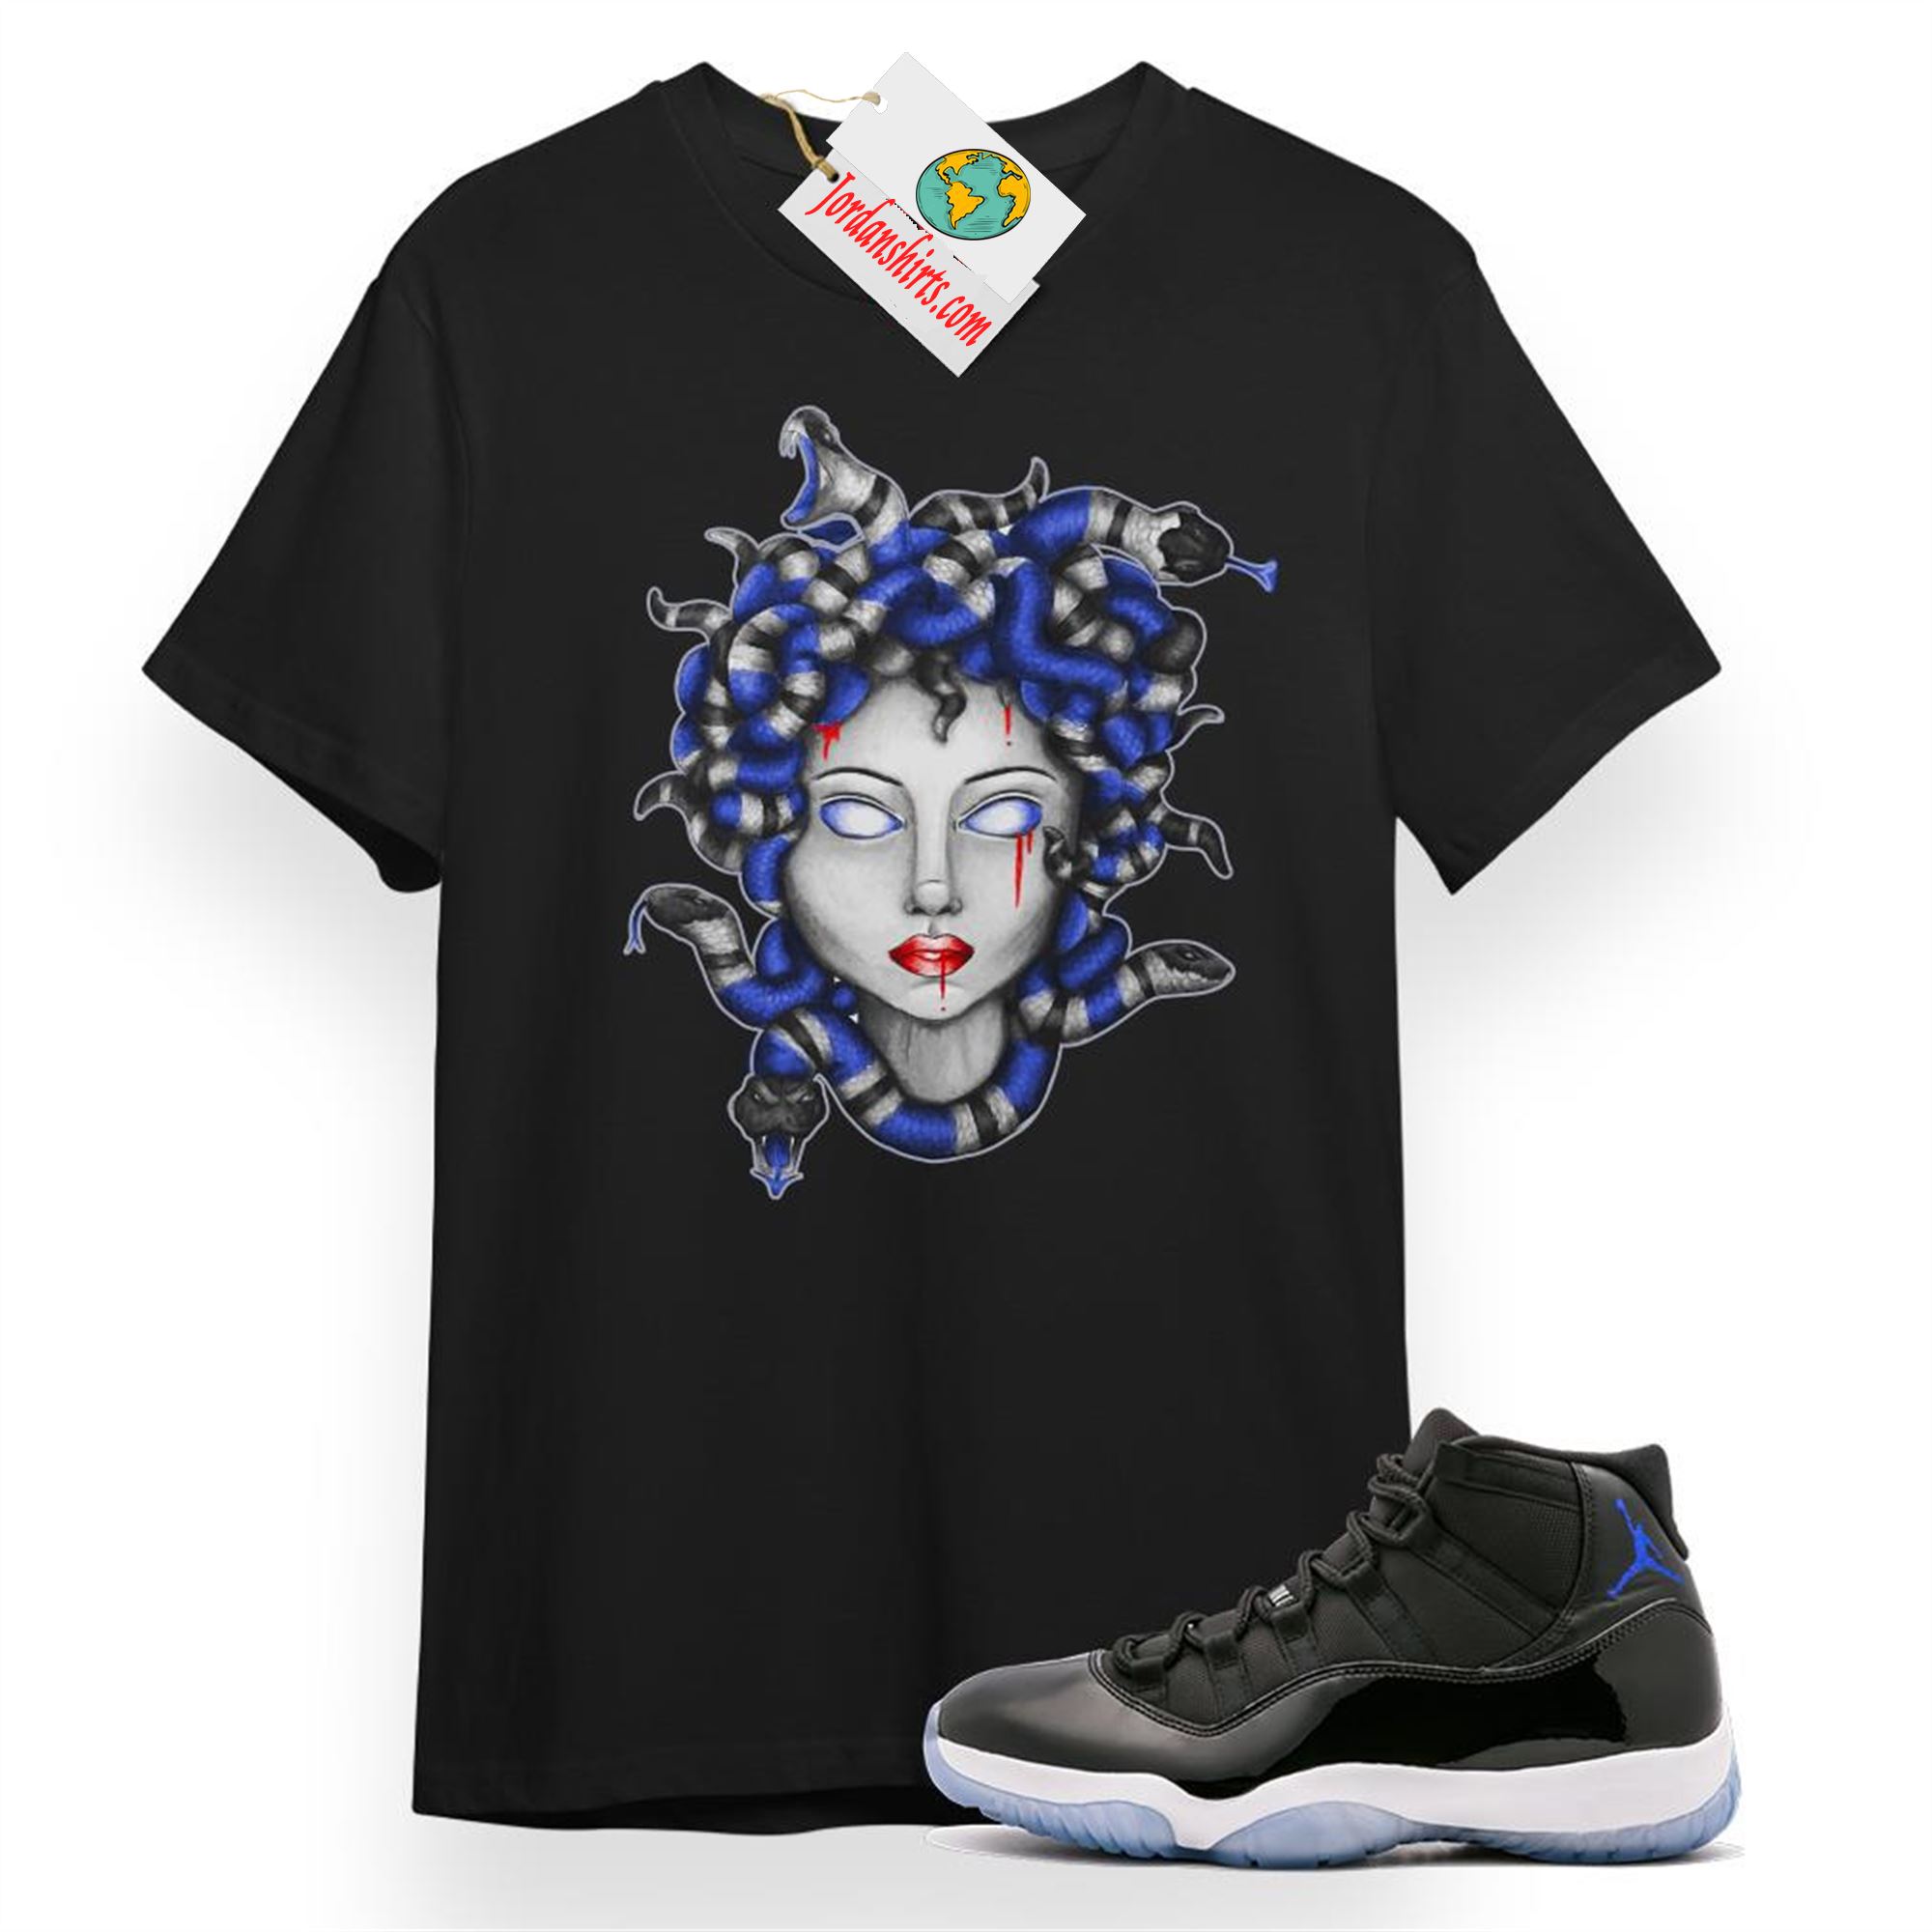 Jordan 11 Shirt, Medusa Snake Black T-shirt Air Jordan 11 Space Jam 11s Plus Size Up To 5xl